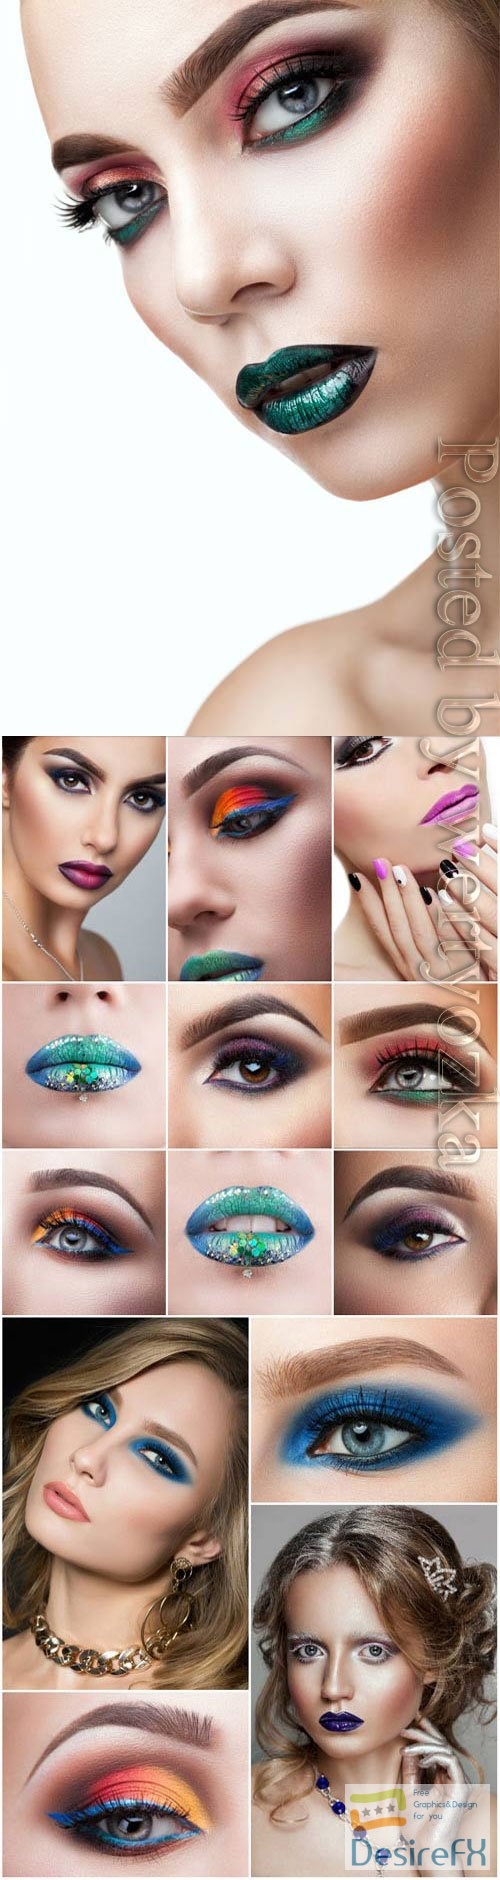 Girls with beautiful fashion makeup stock photo